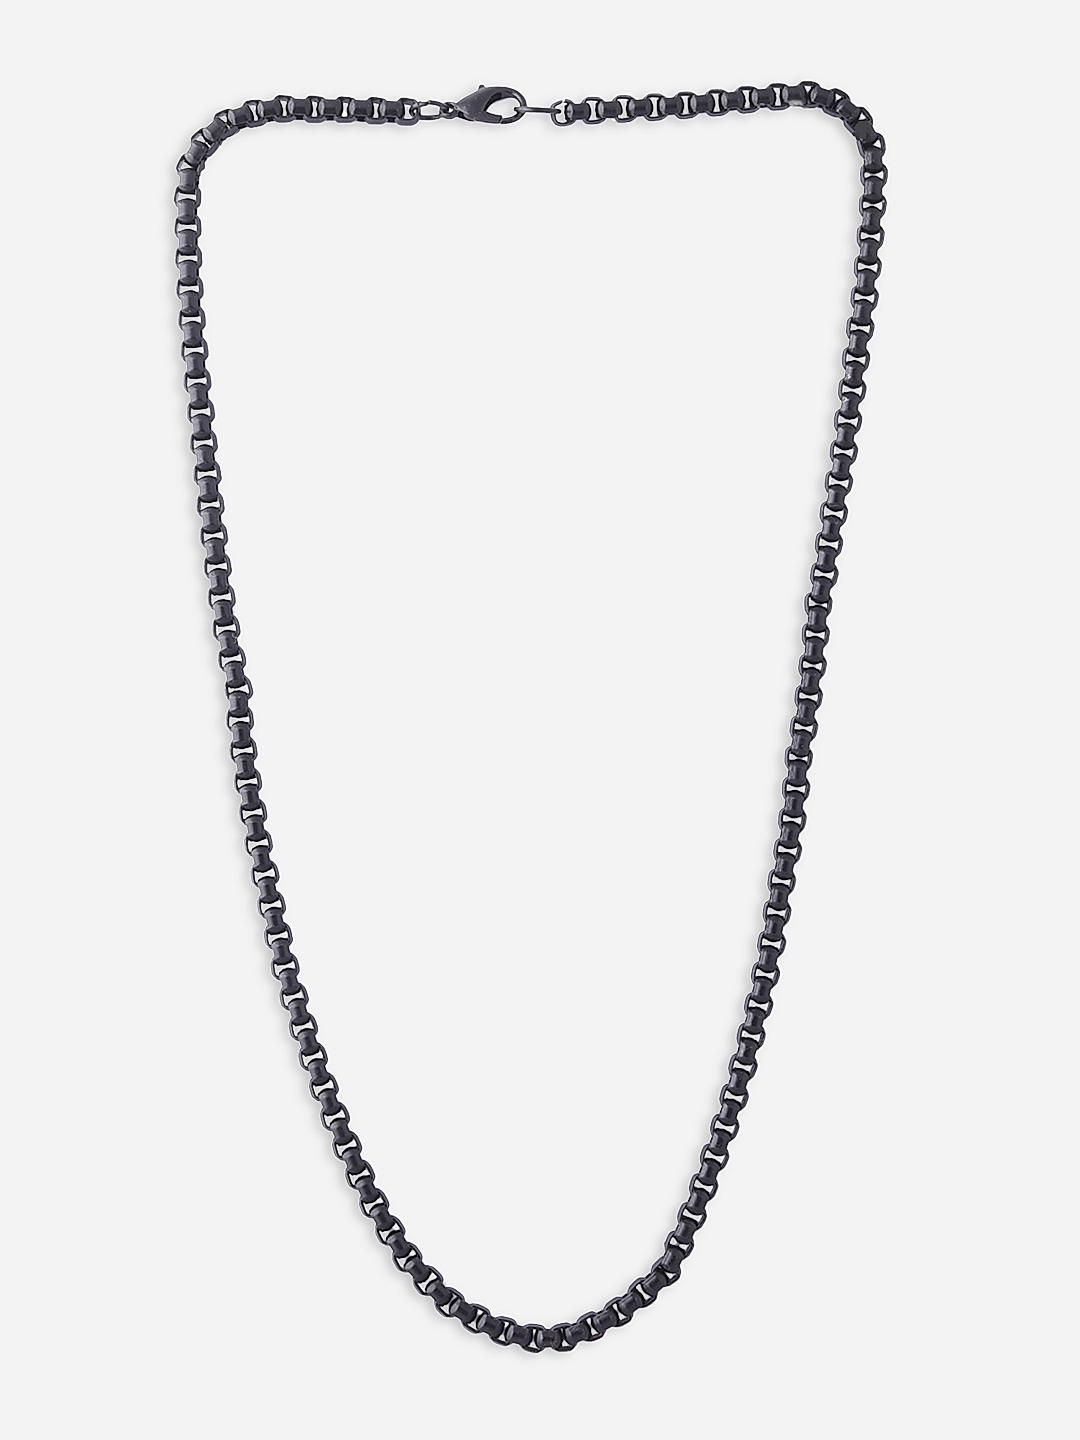 Stylish 3D Black Cuboid Pendant Chain For Men / Boys Black Pendant With  Black Chain Stainless Steel (